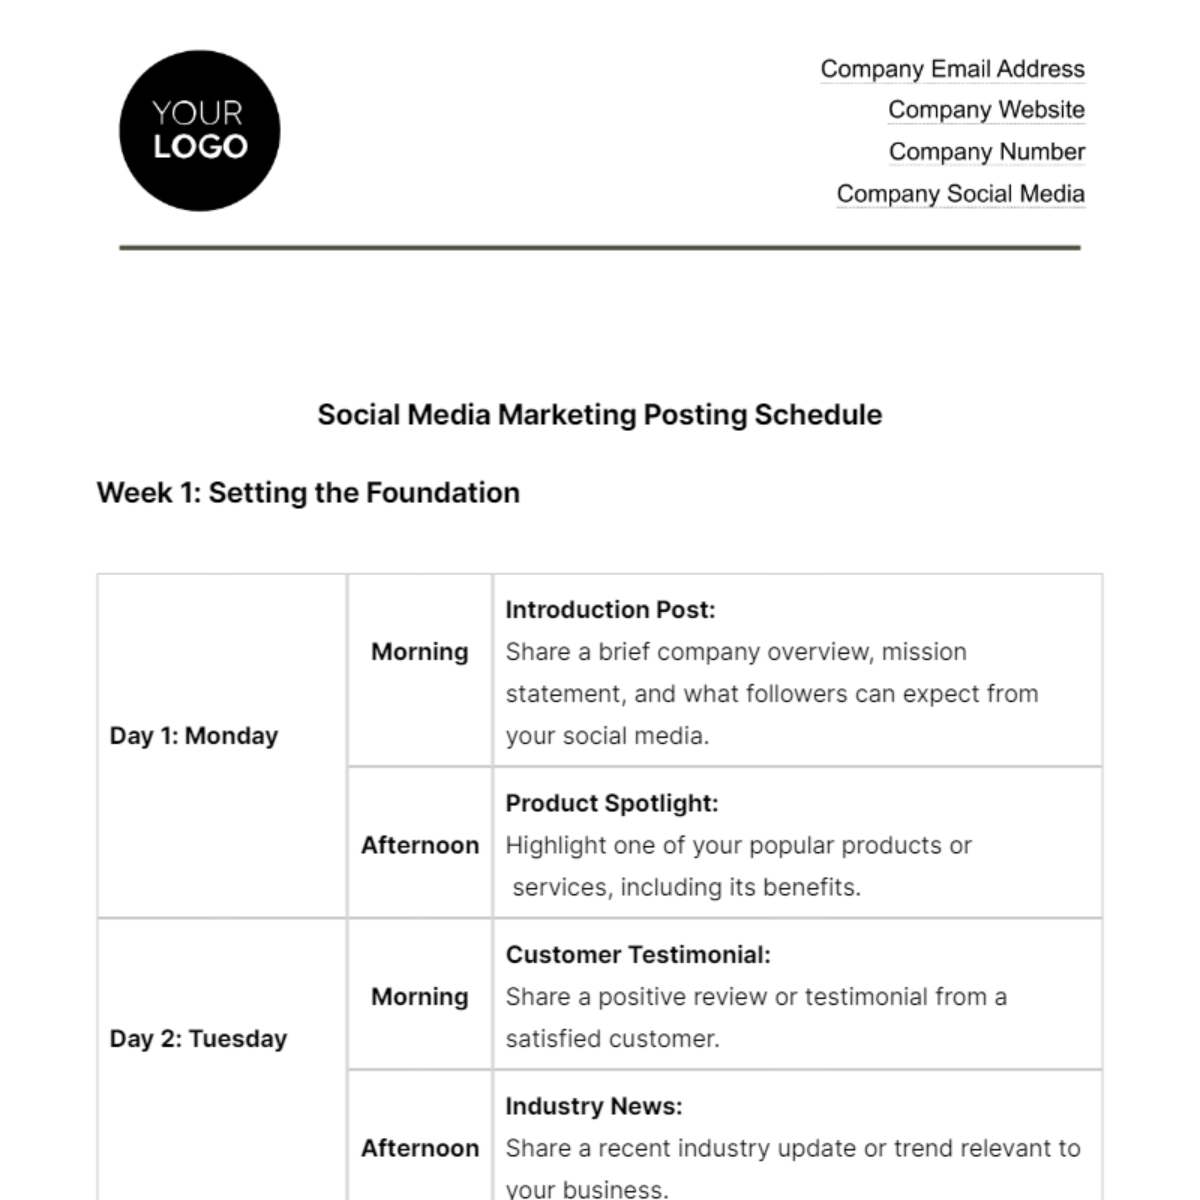 Social Media Marketing Posting Schedule Template